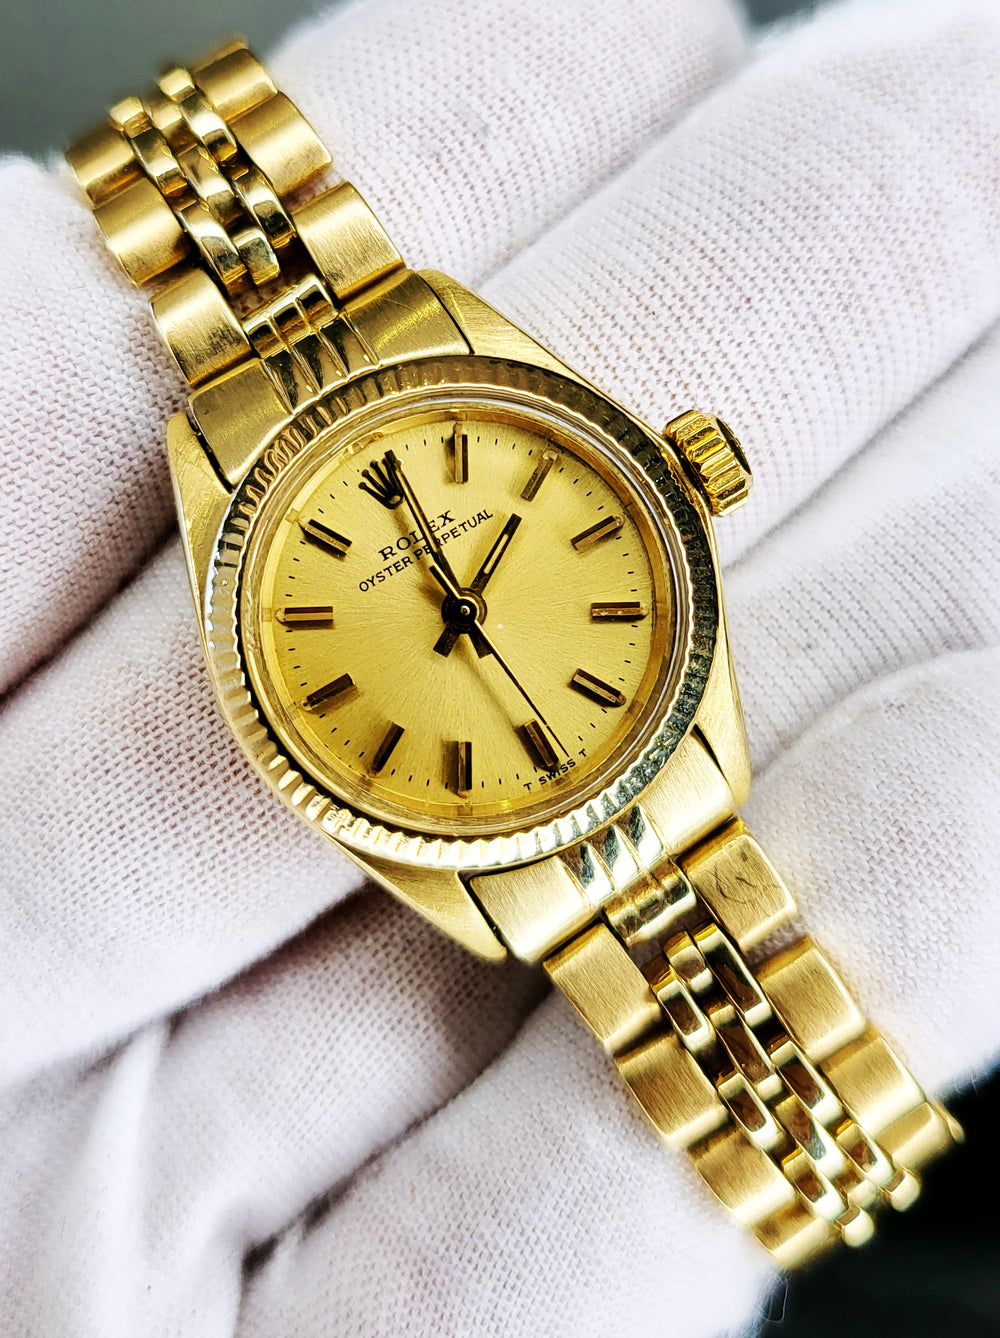 Ladies Rolex Oyster Perpetual Luxury Watch